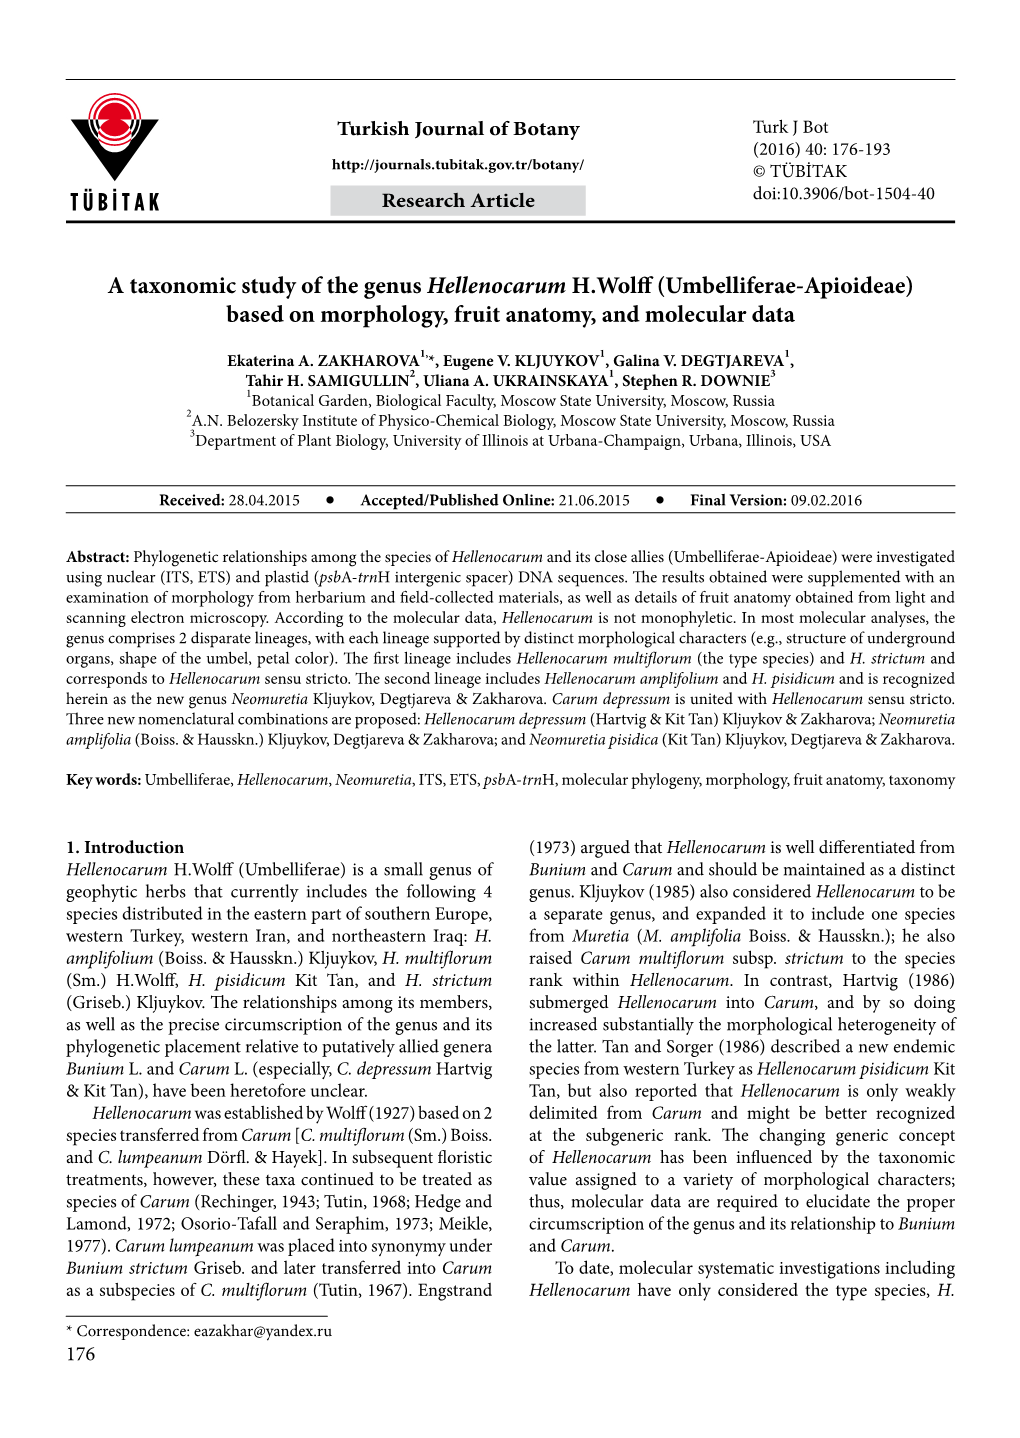 A Taxonomic Study of the Genus Hellenocarum H.Wolff (Umbelliferae-Apioideae) Based on Morphology, Fruit Anatomy, and Molecular Data